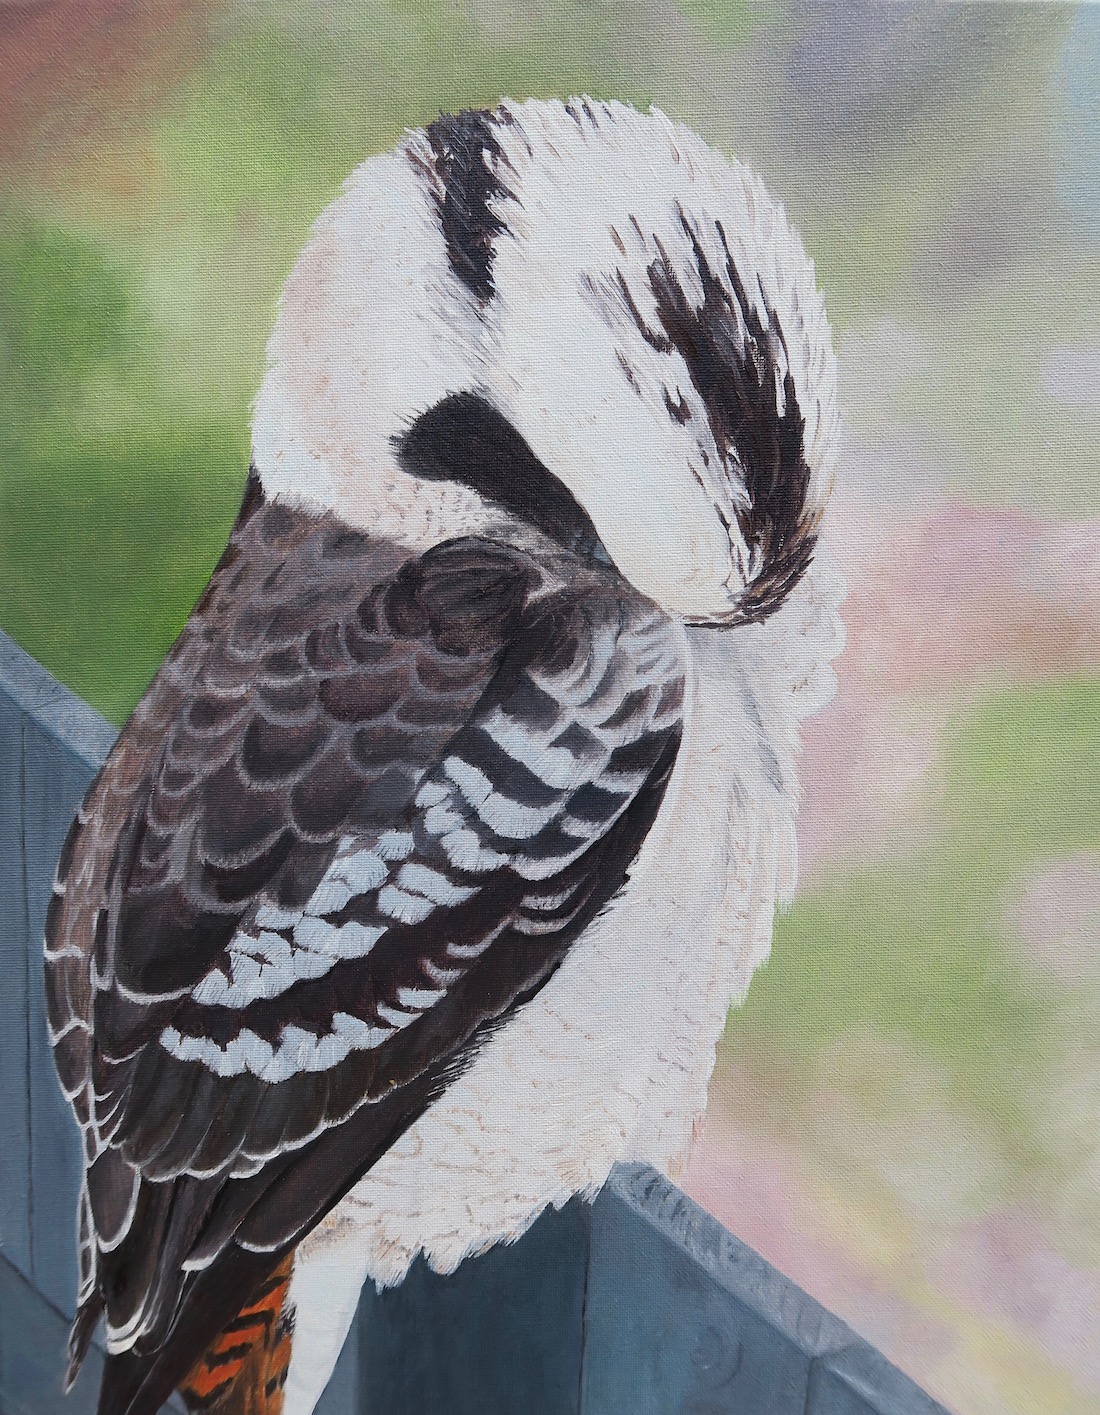 Painting of Shame Kookaburra by Niko Dujmovic